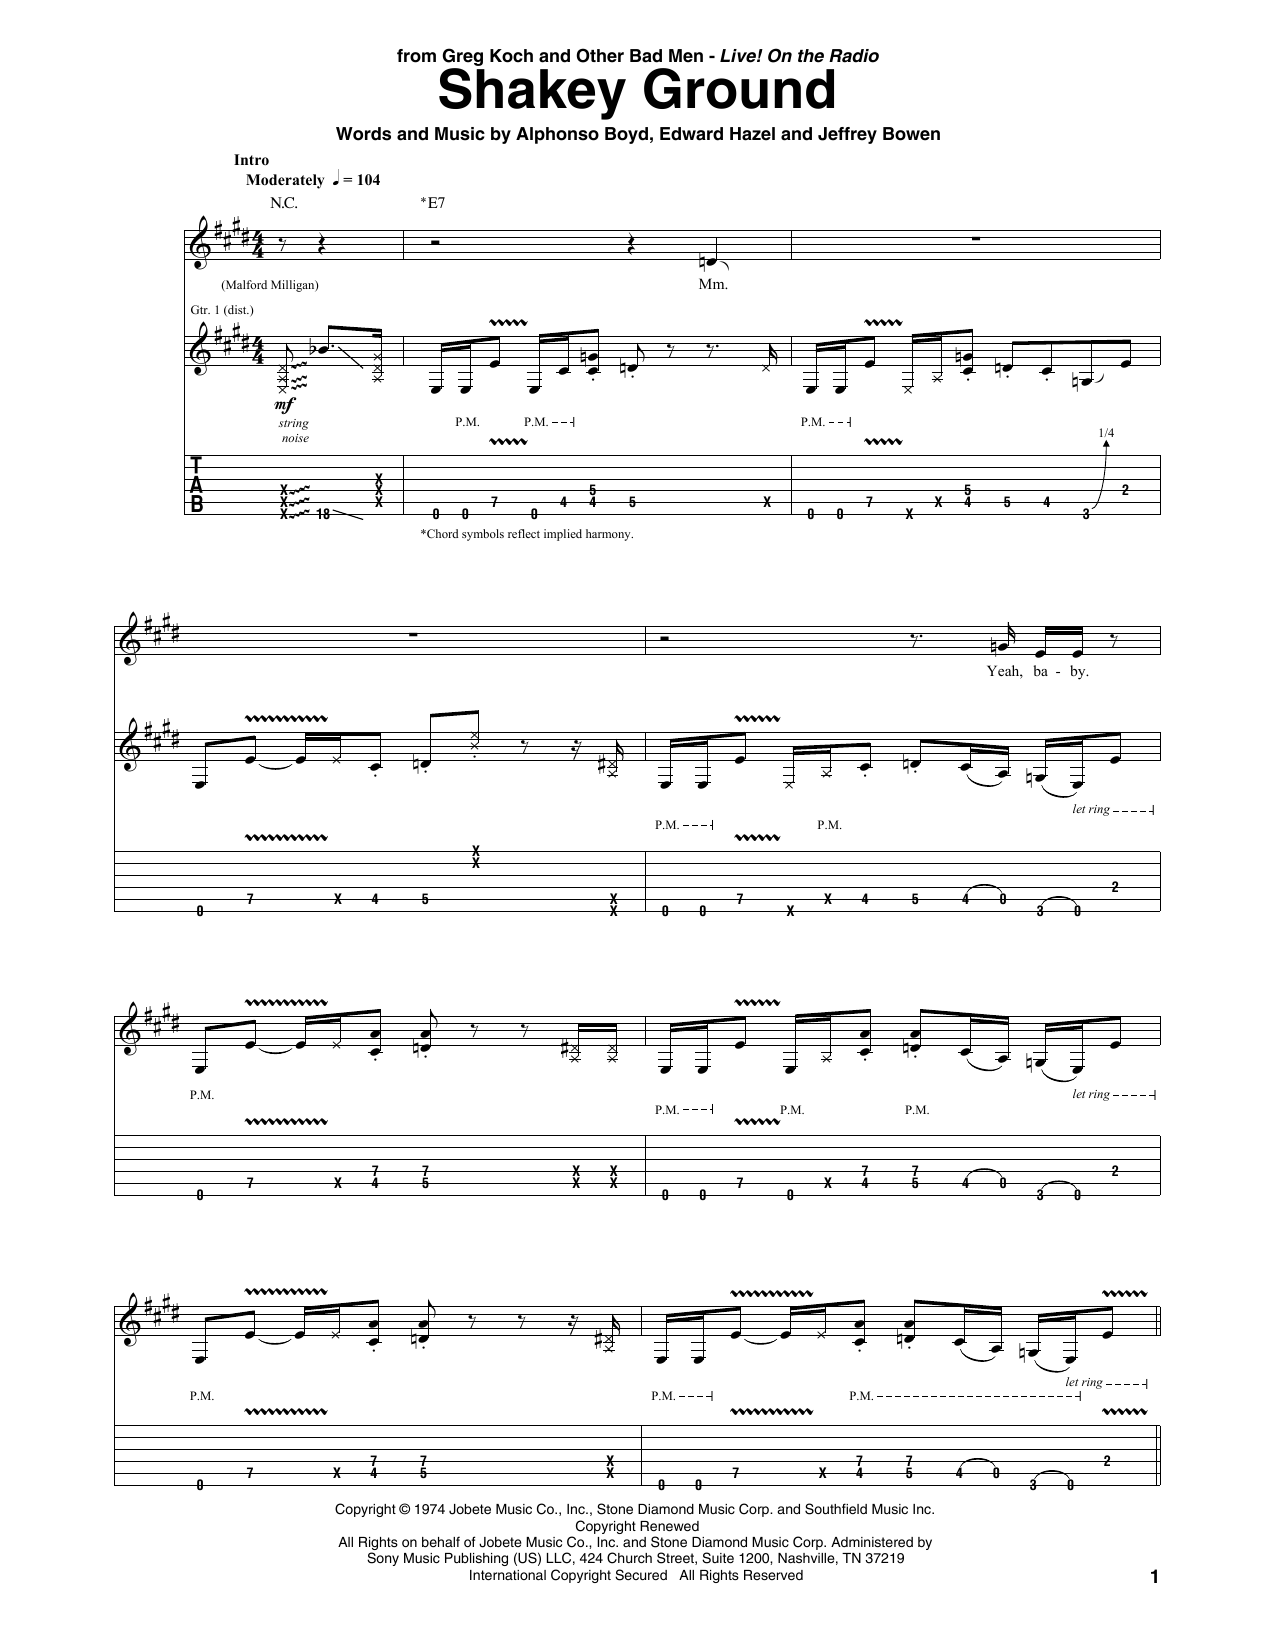 Greg Koch Shakey Ground Sheet Music Notes & Chords for Guitar Tab - Download or Print PDF